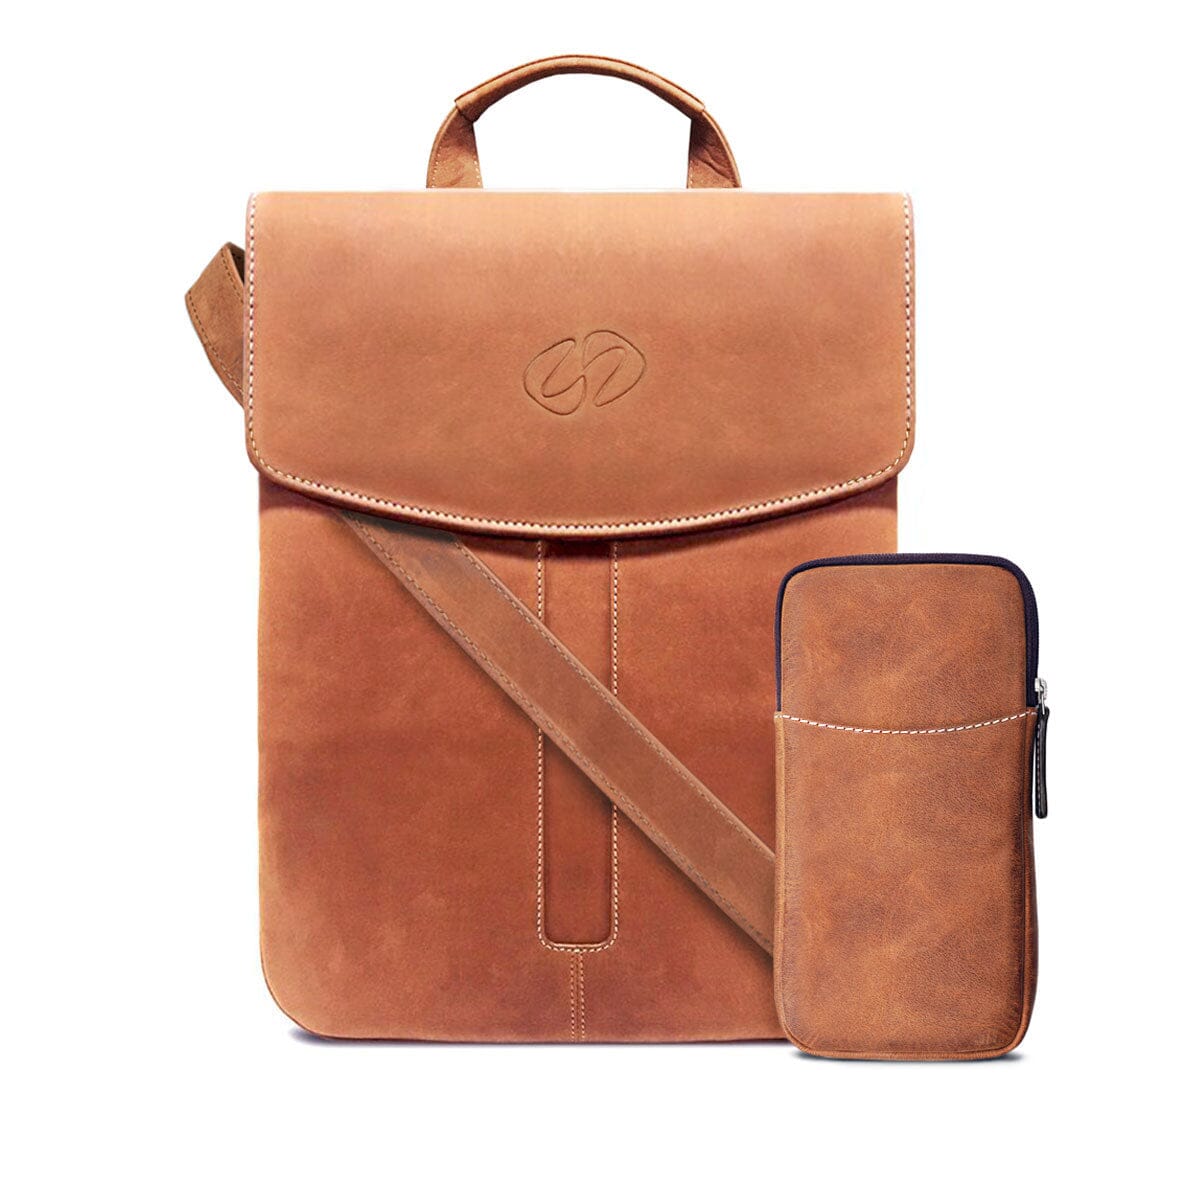 Crossbody Ipad Bag For Women Genuine Leather Brown Shoulder Purse Handmade  Sling | eBay